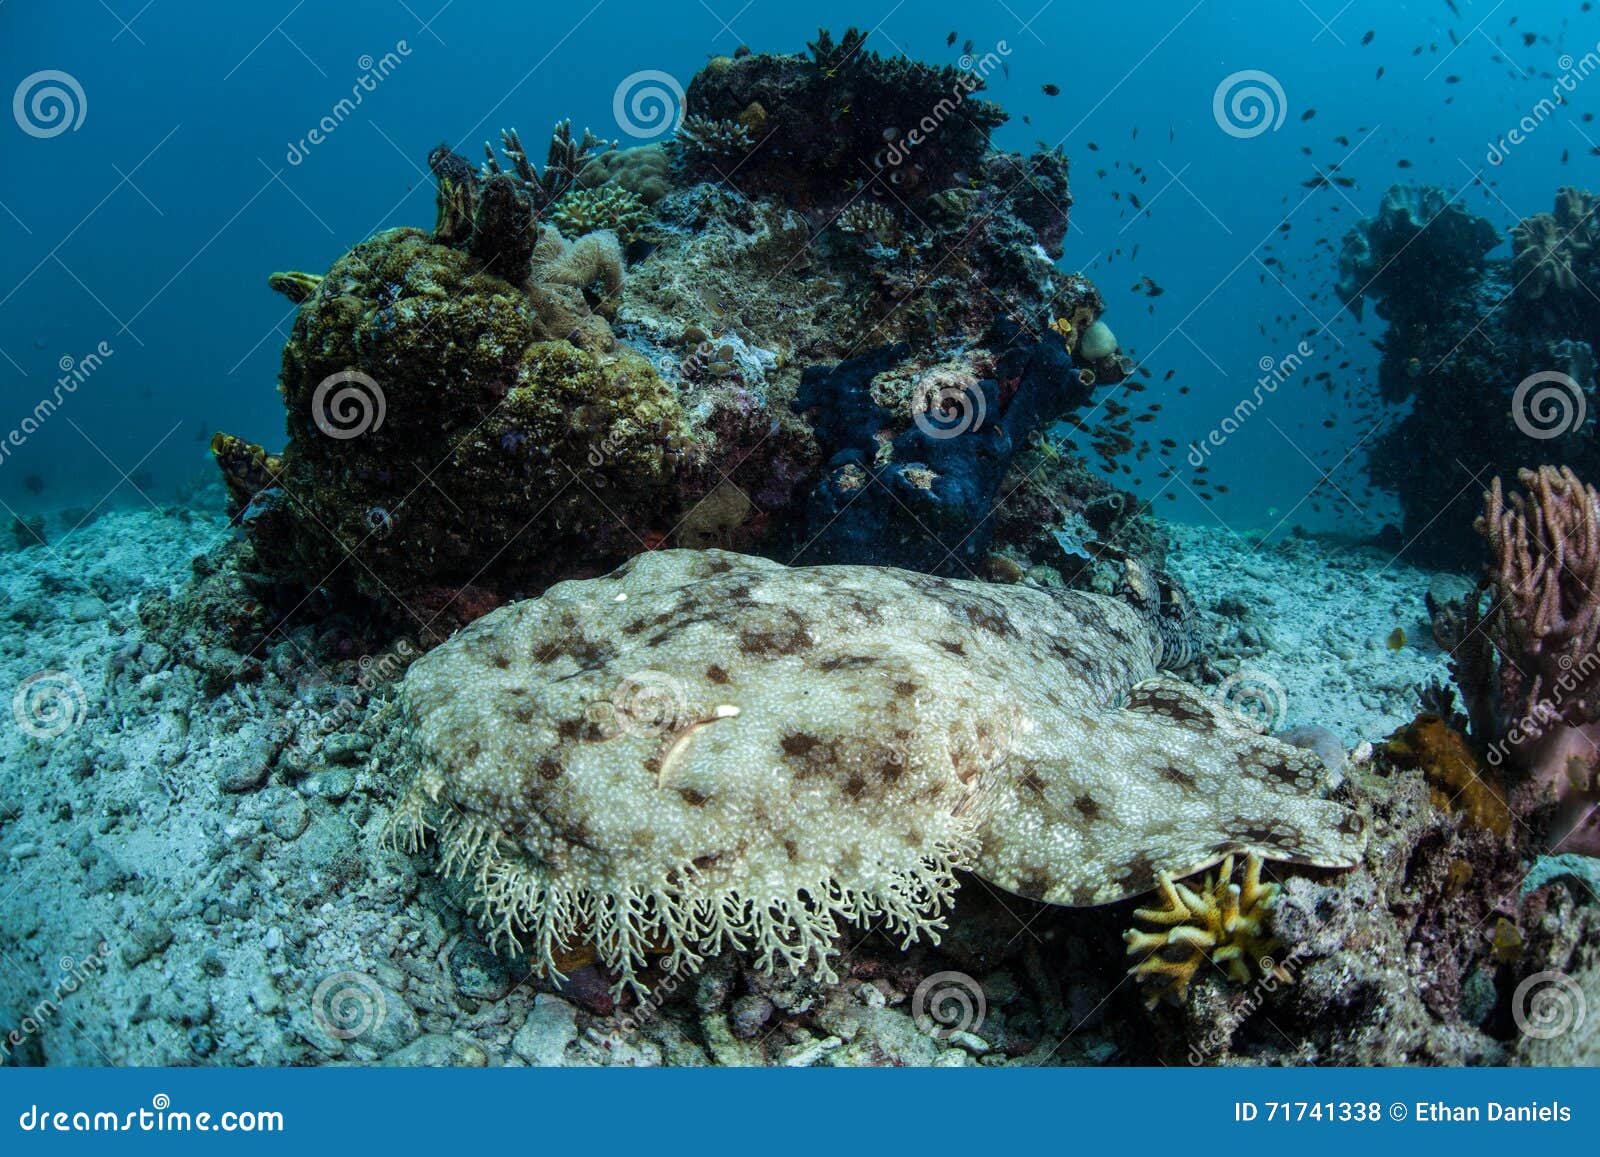 tasseled wobbegong shark on seafloor